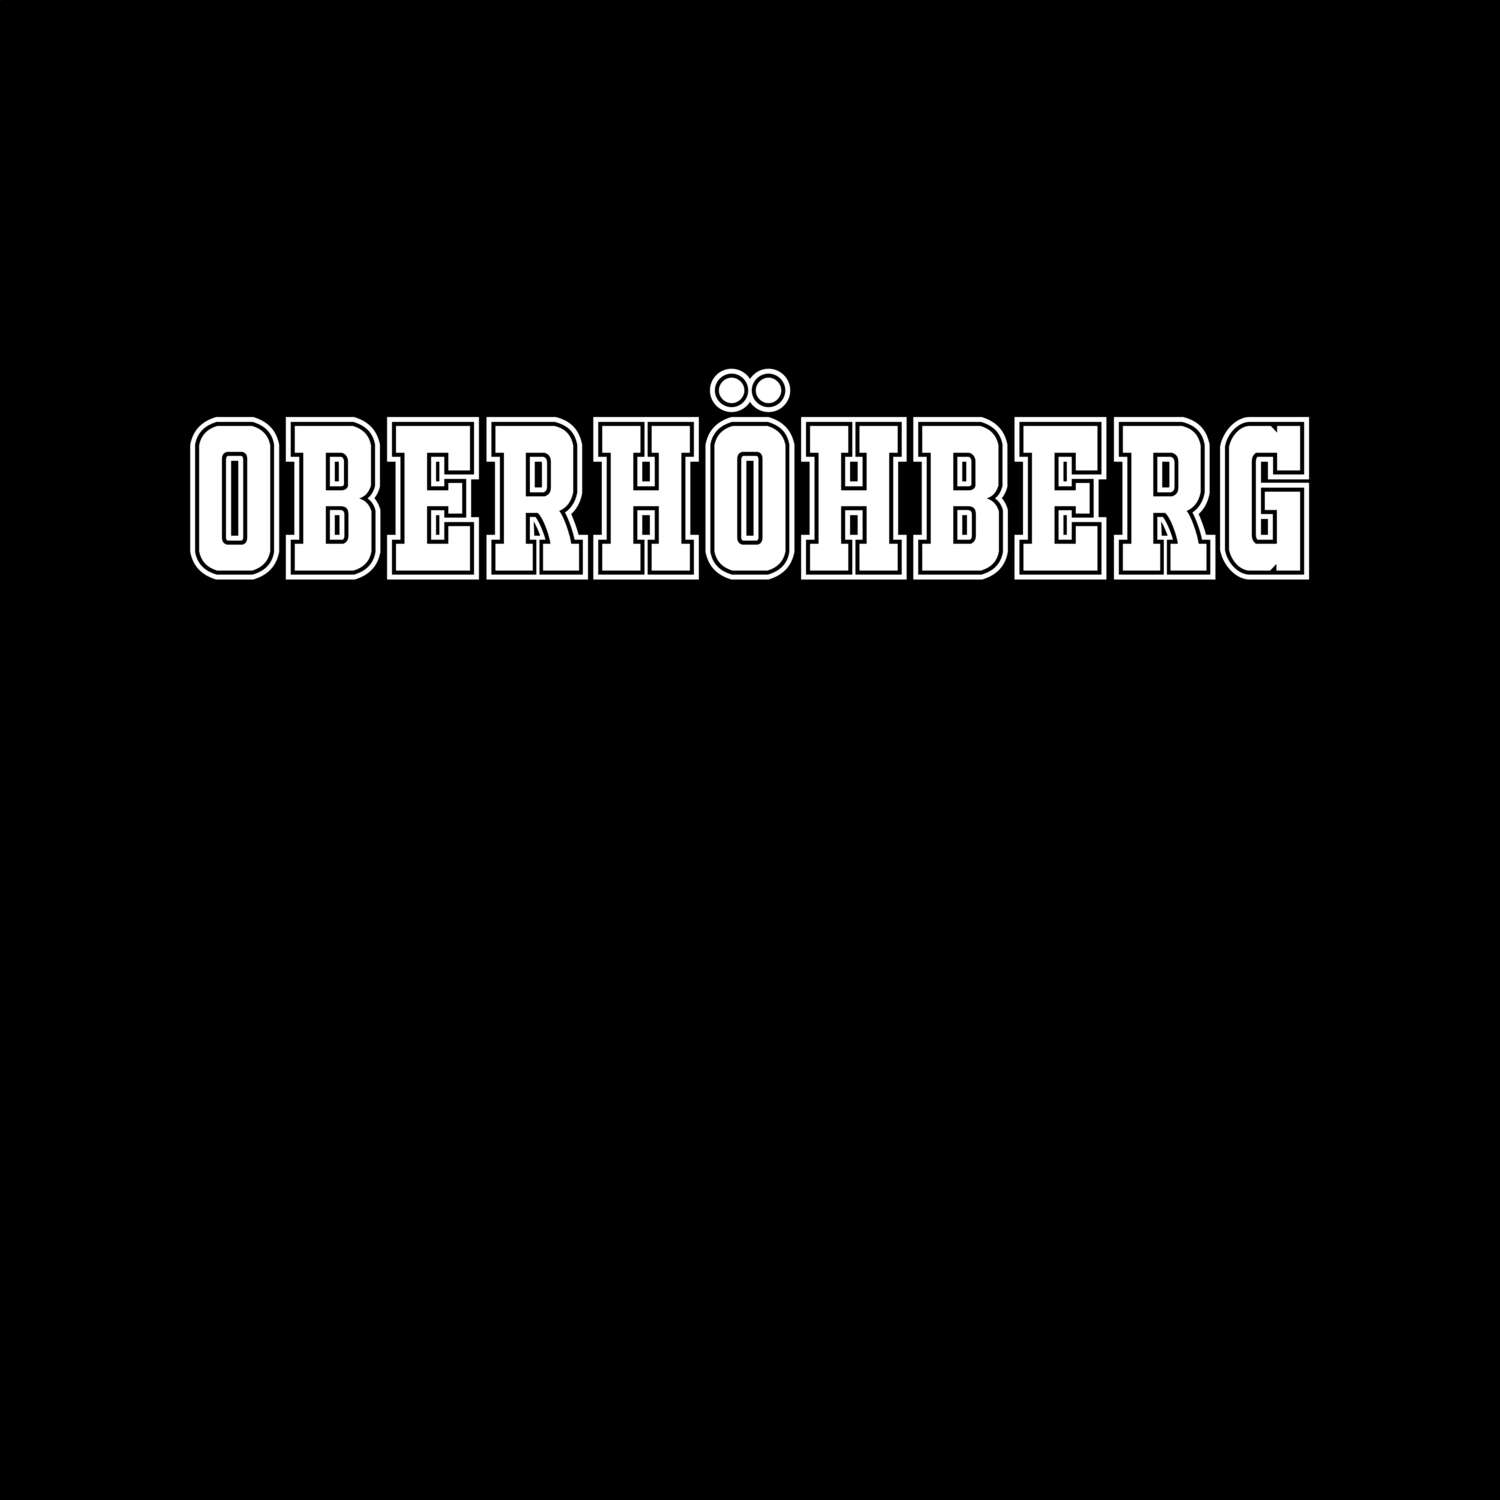 Oberhöhberg T-Shirt »Classic«